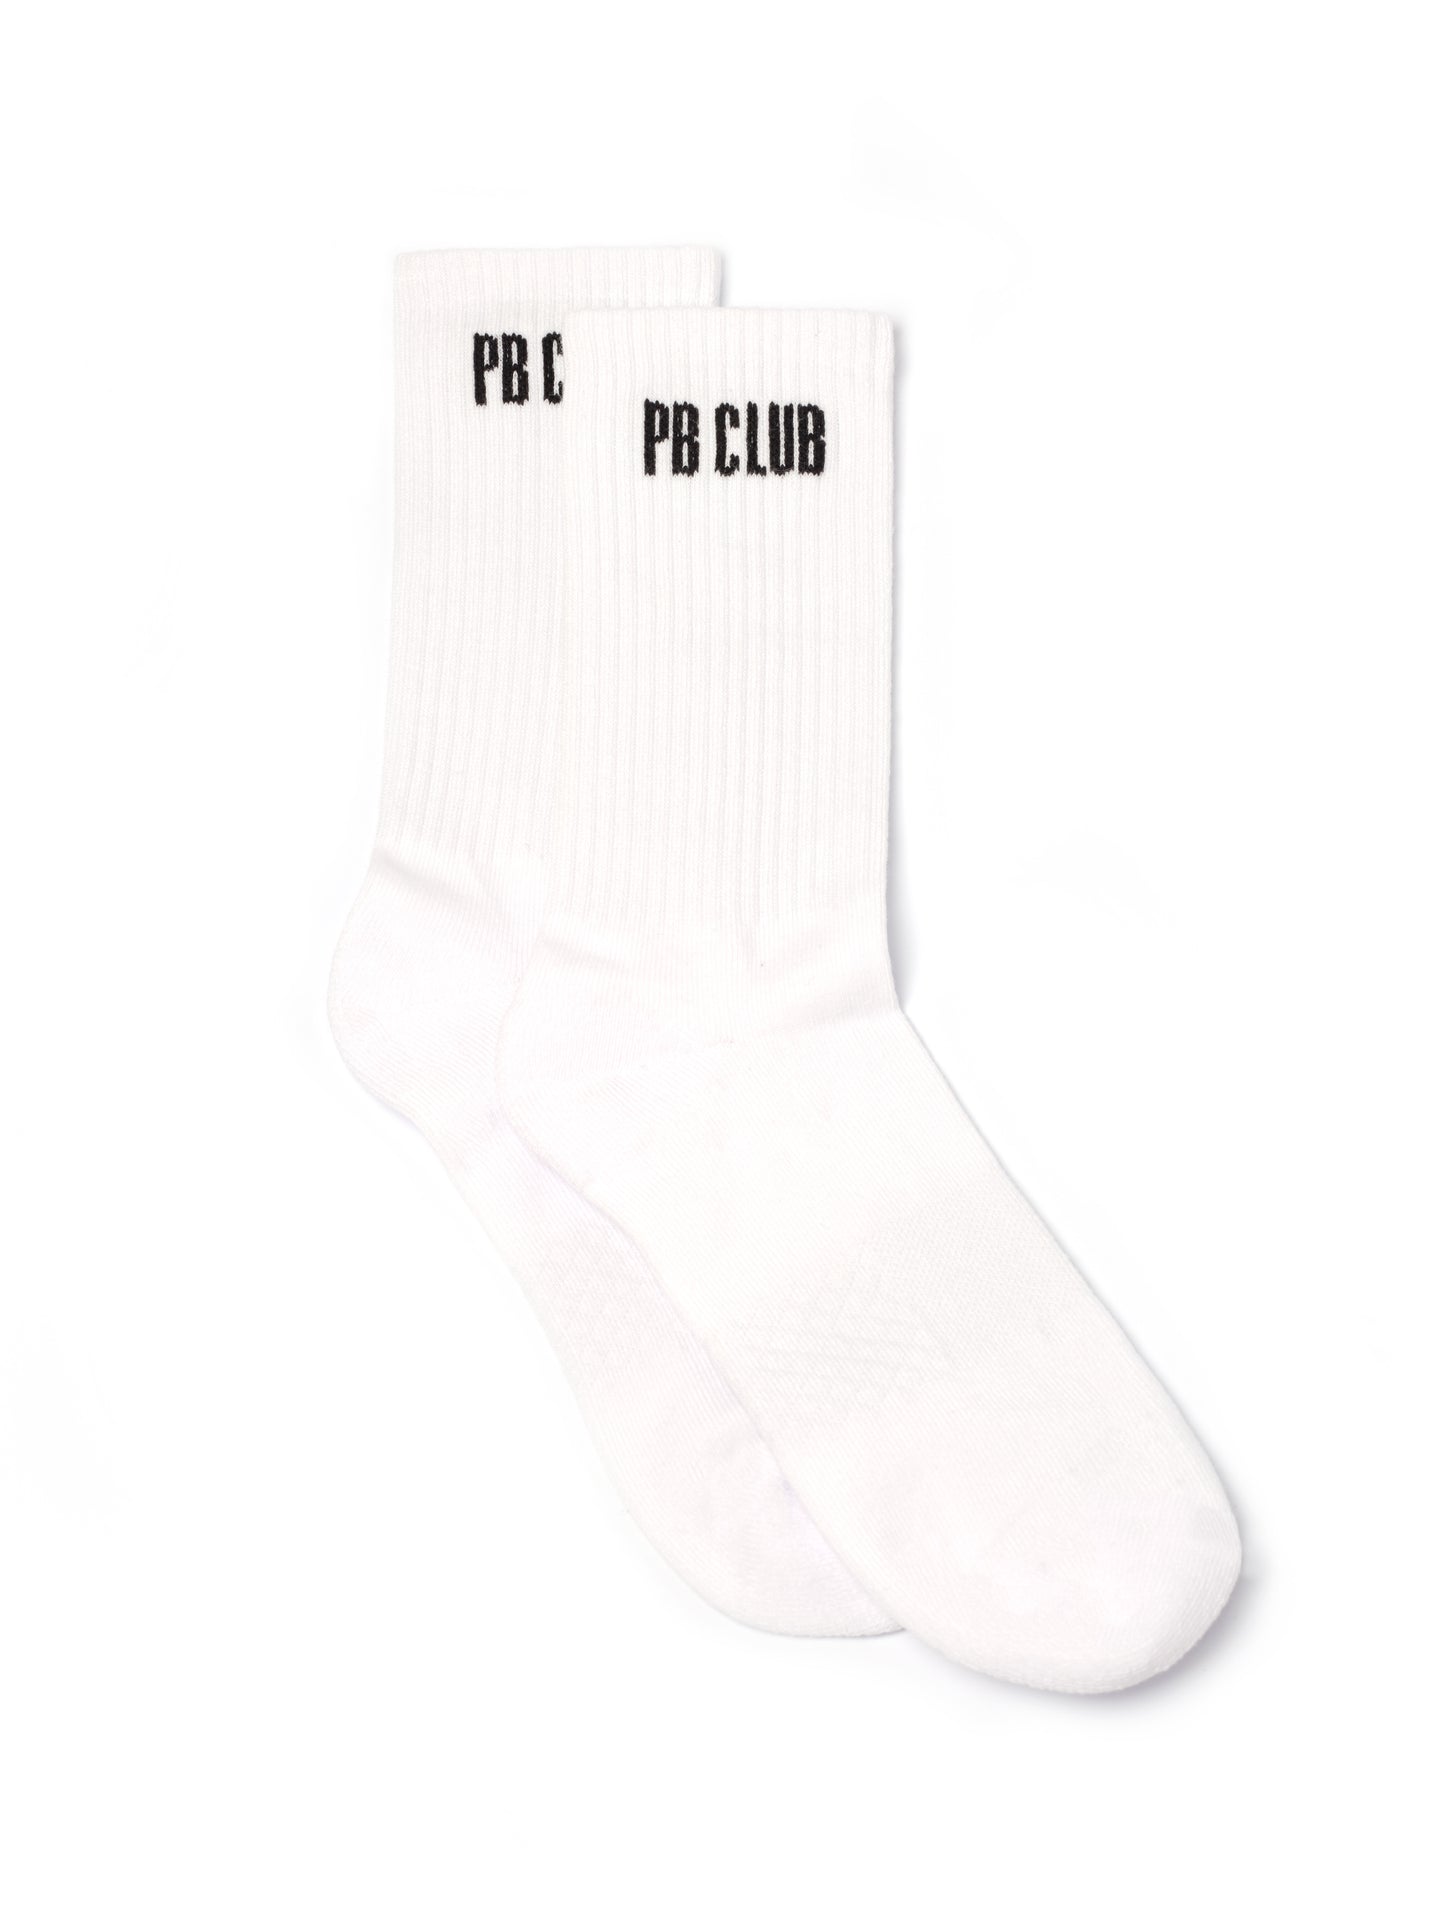 PB Club Socks